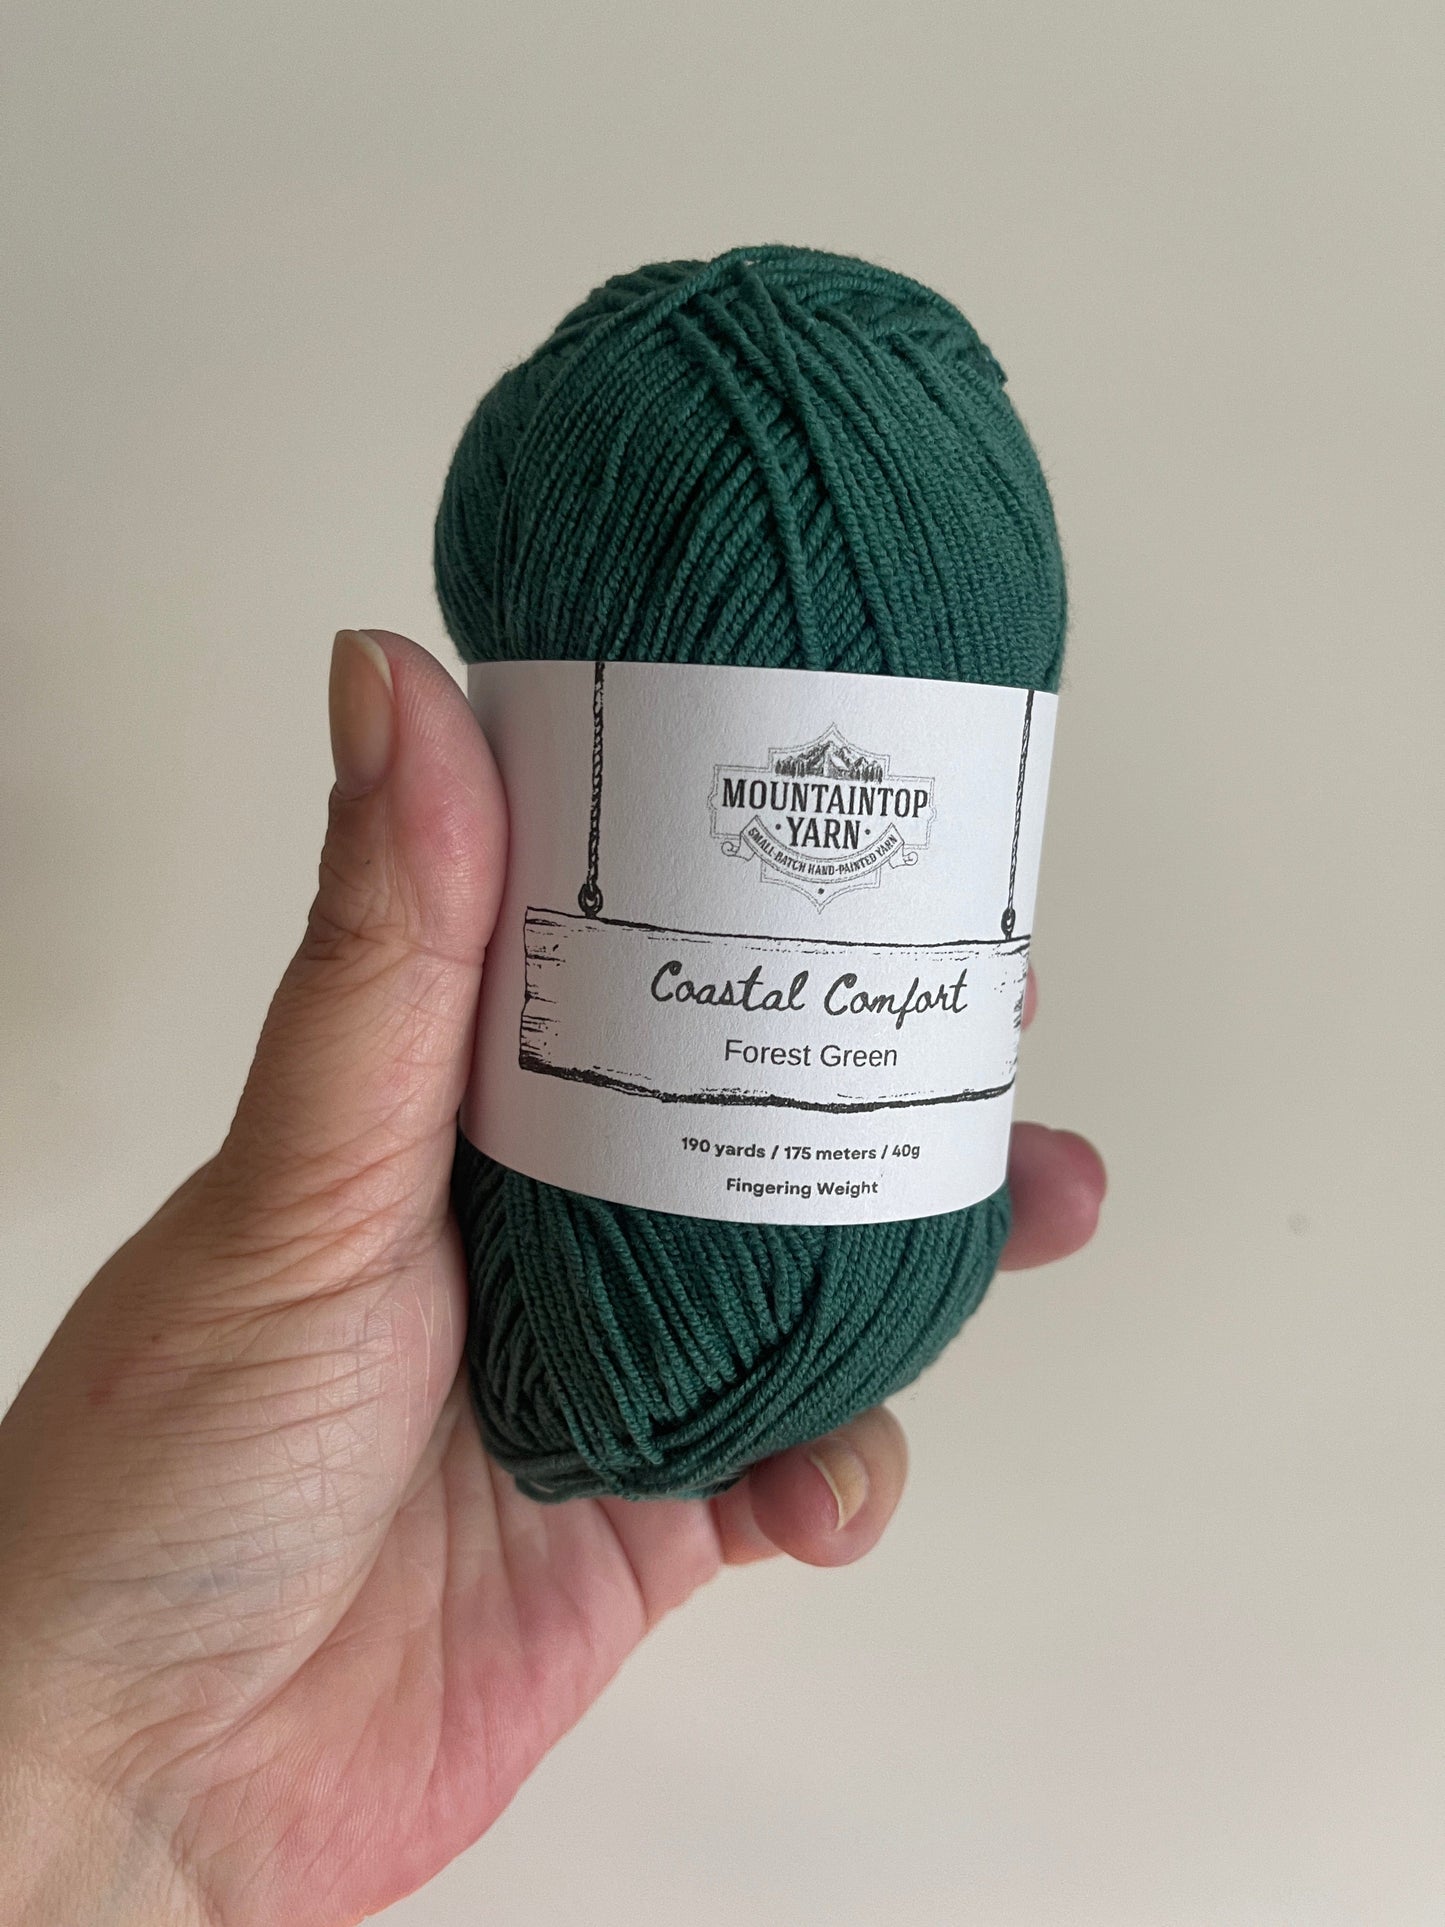 Mountaintop Yarn Forest Green Coastal Comfort - Cotton and Acrylic Blend Yarn Yarn